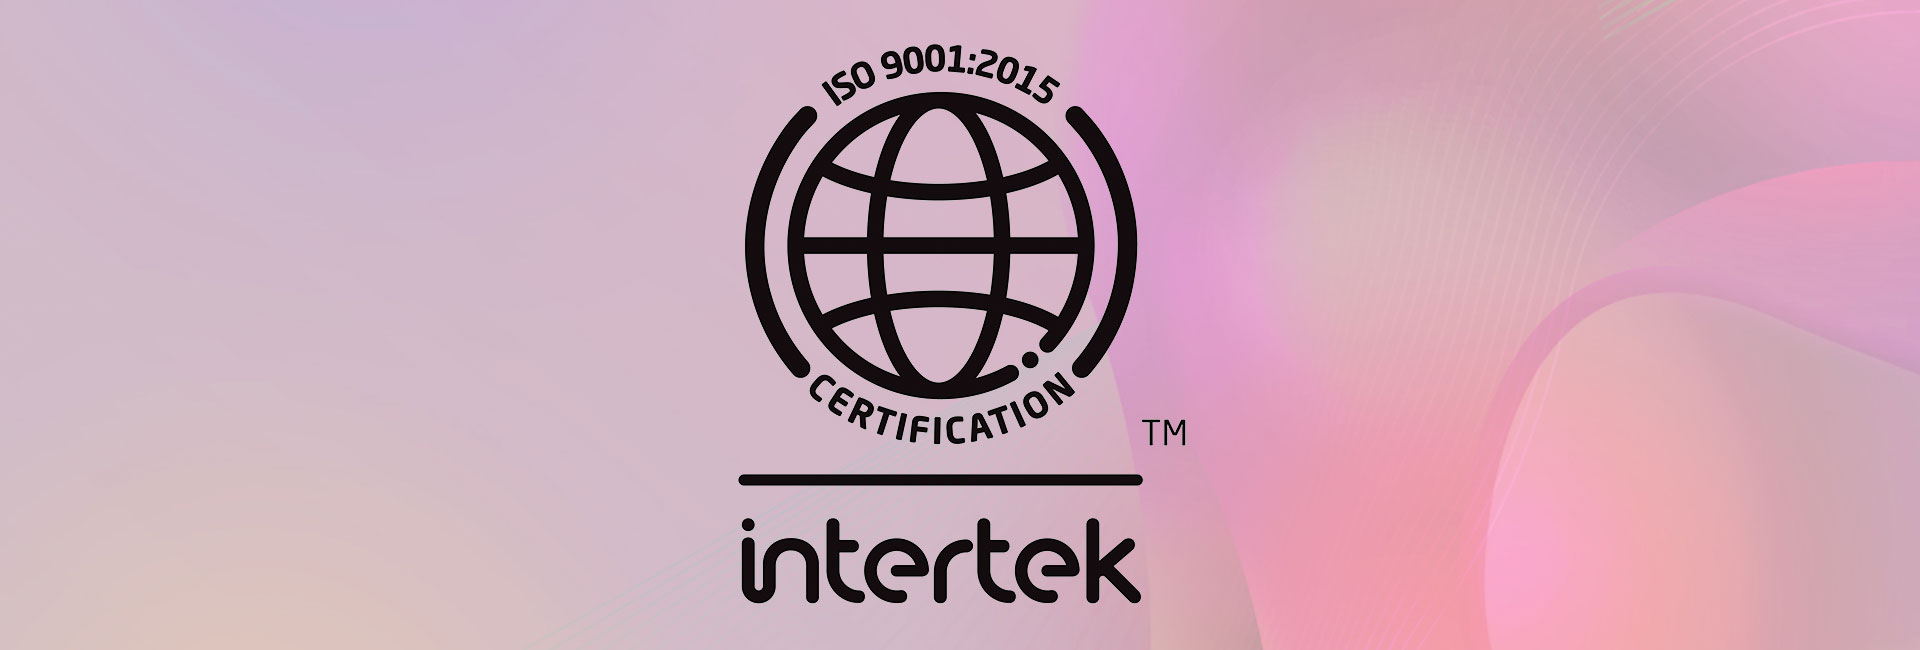 2015-Certification-banner